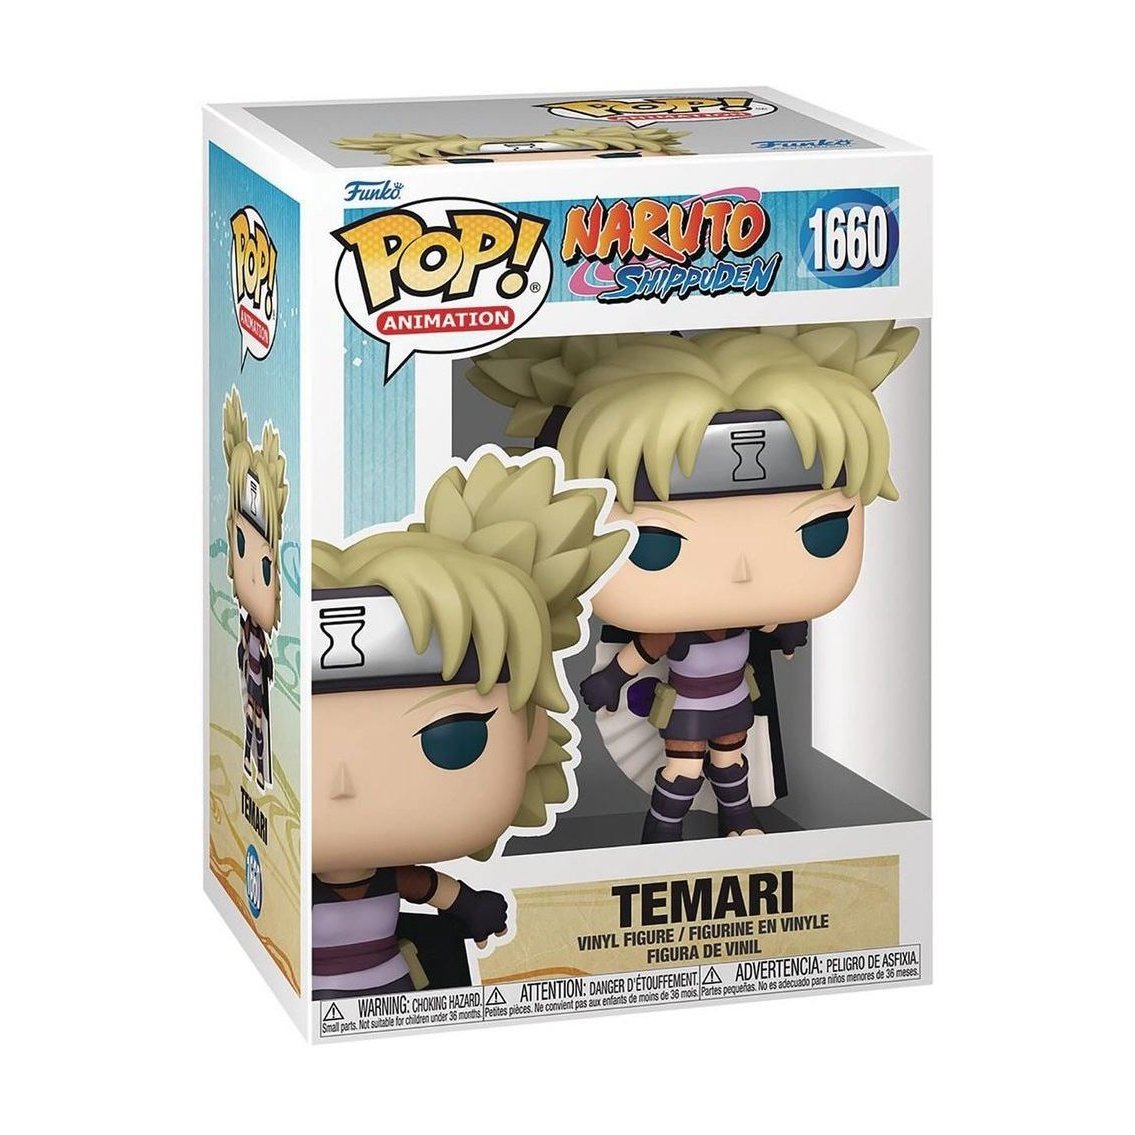 ""PRE-ORDER"" Funko POP! Naruto: Temari